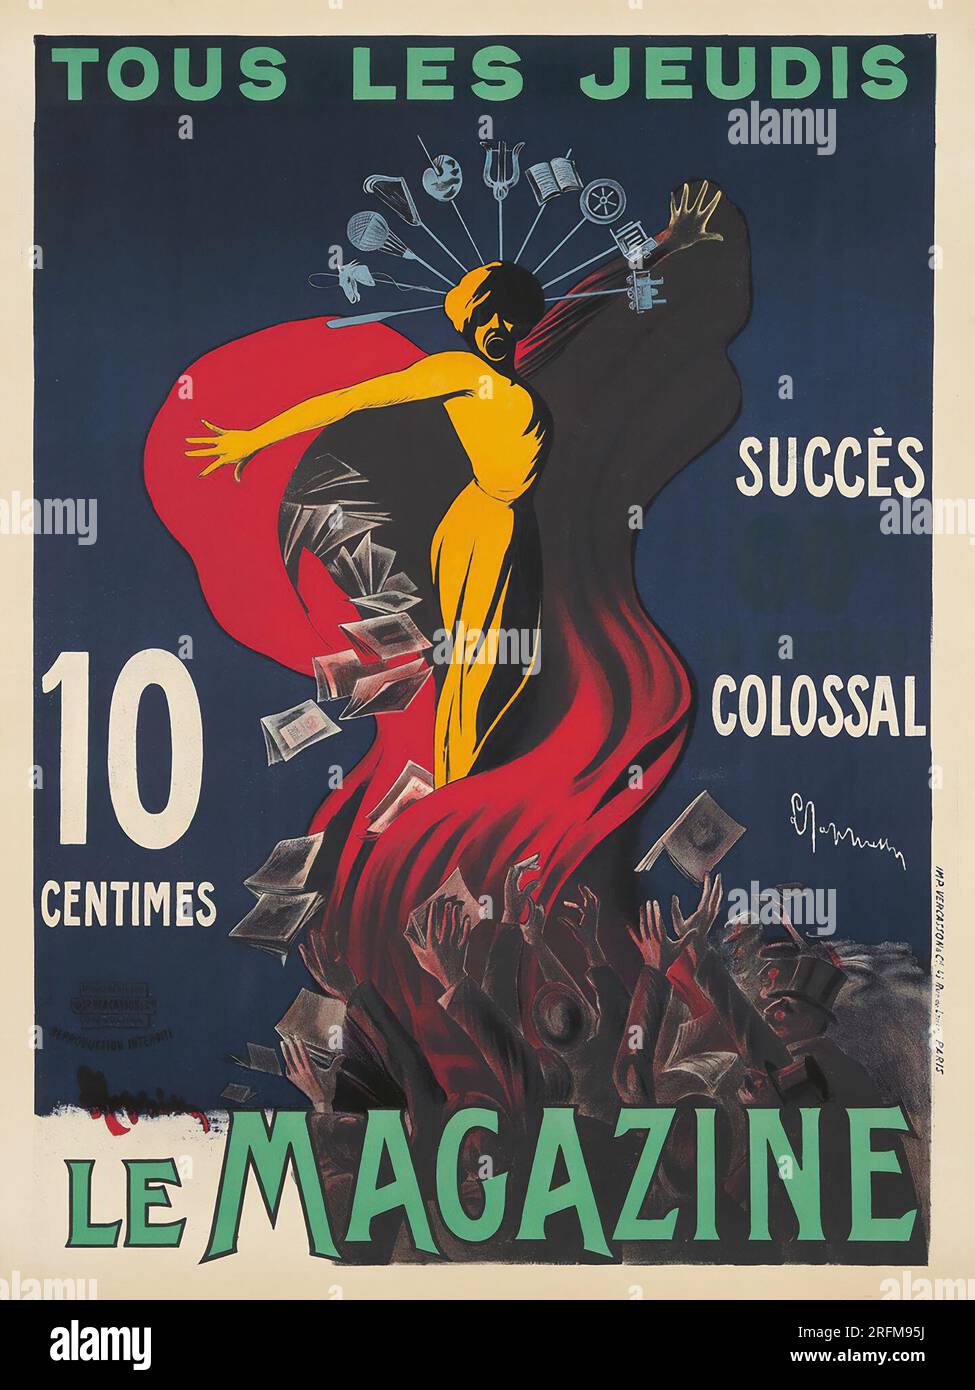 Le Magazine. Vintage advertisement poster by Leonetto Cappiello Stock Photo